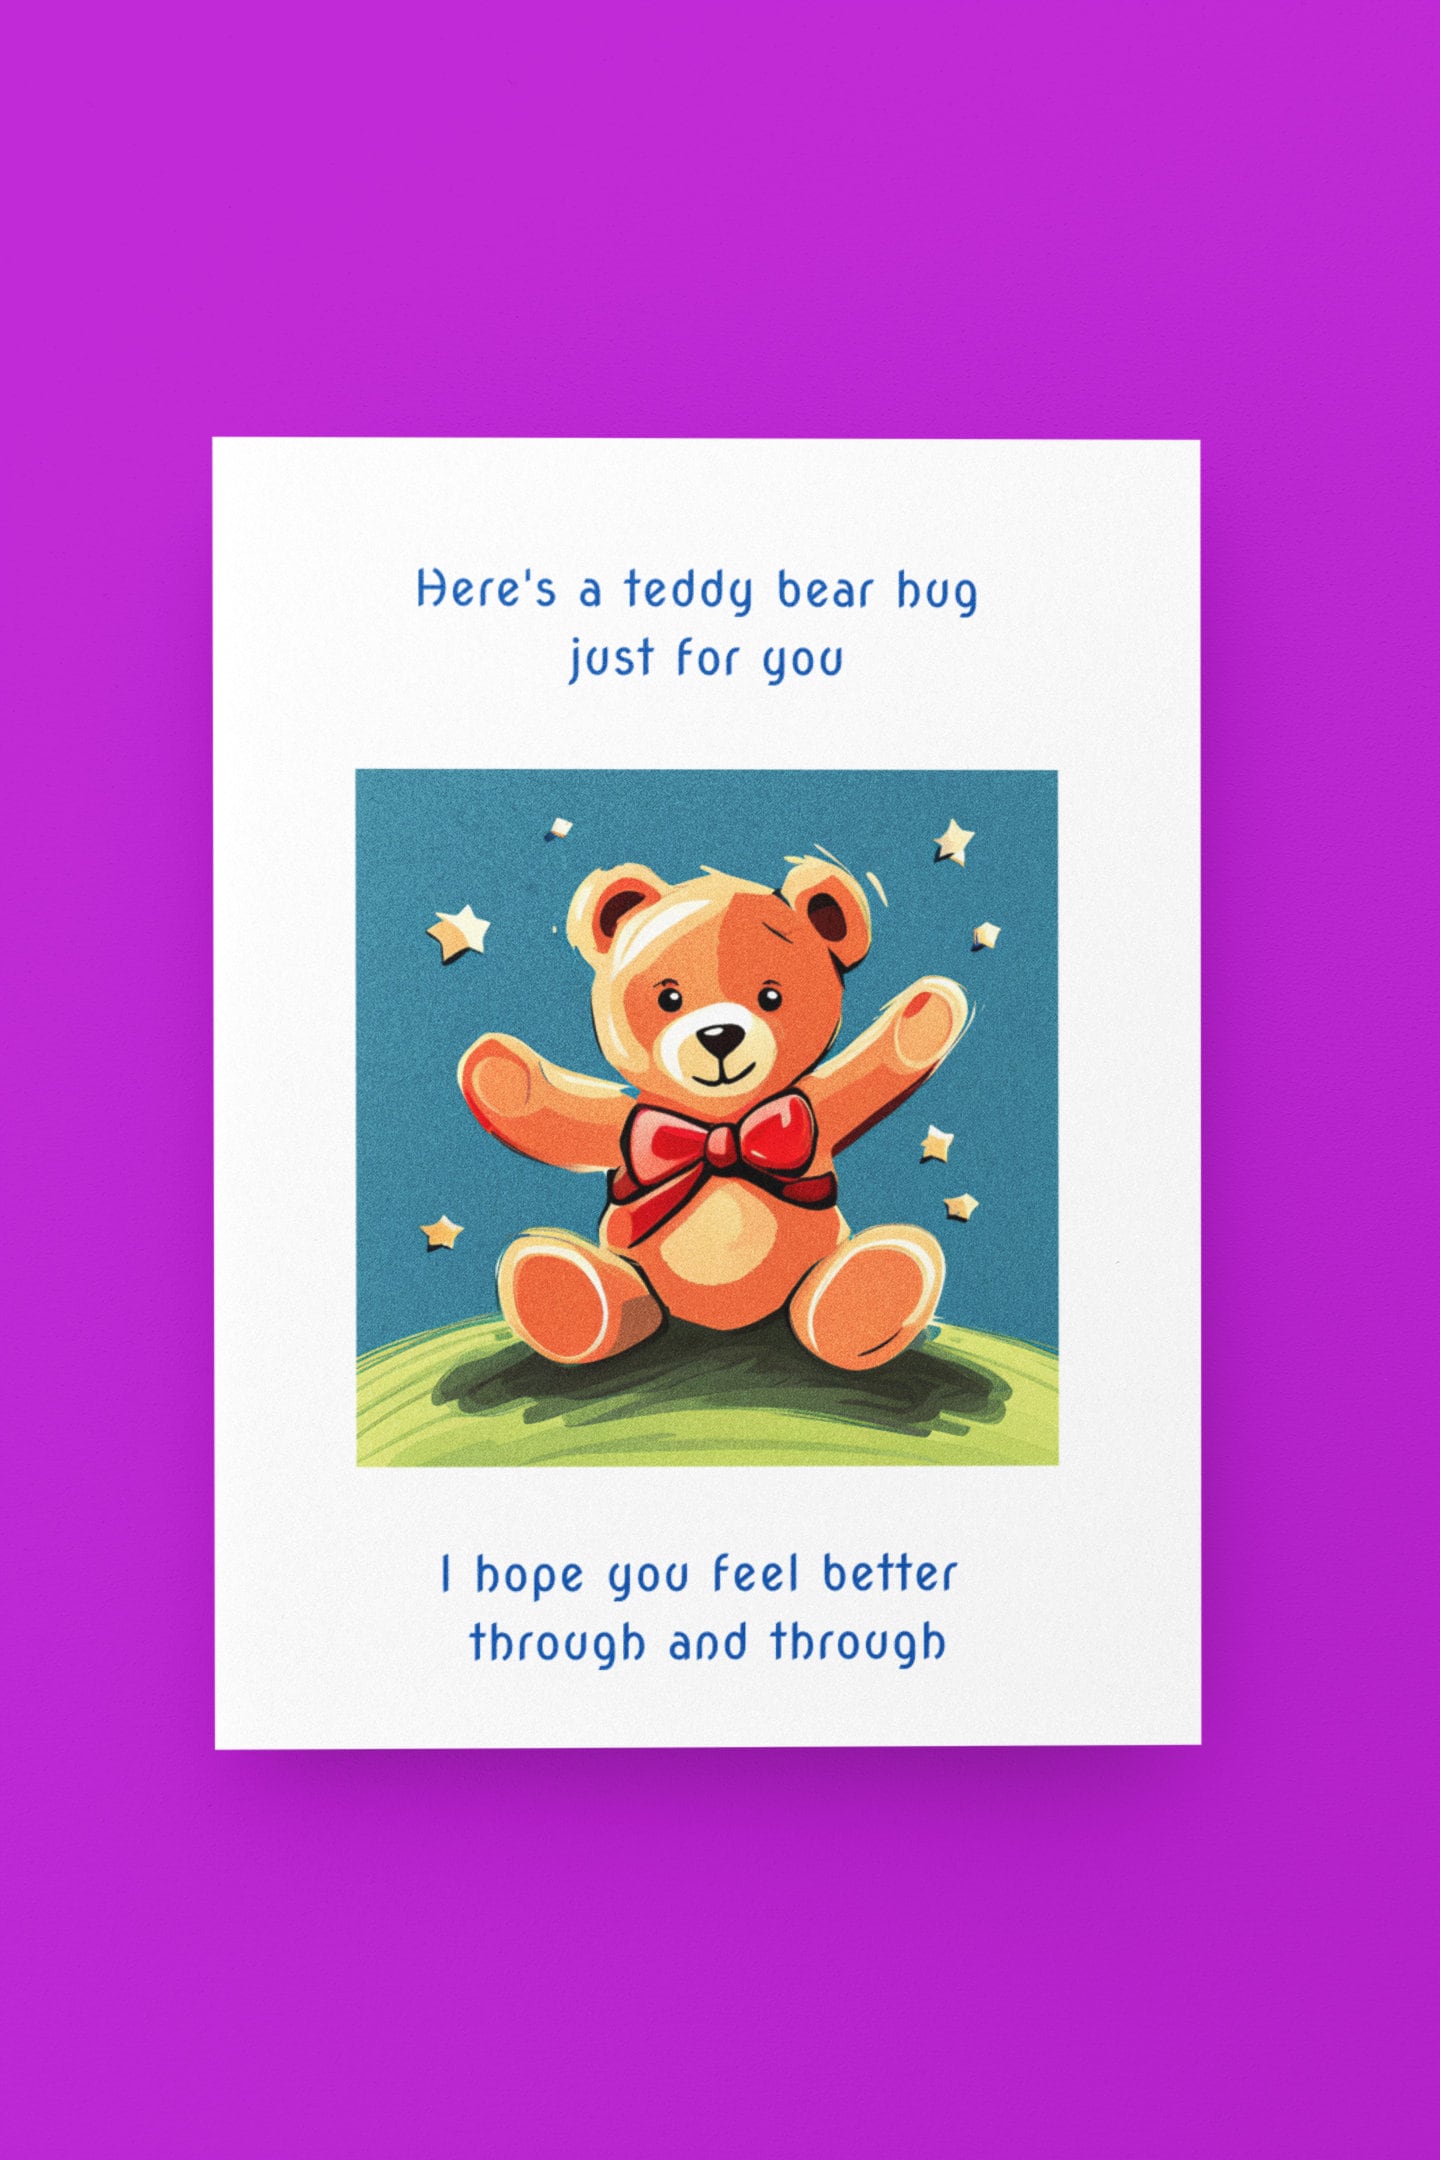 GET WELL SOON Cartoon Teddy Bear in Hospital Gown 7x9.5 Greeting